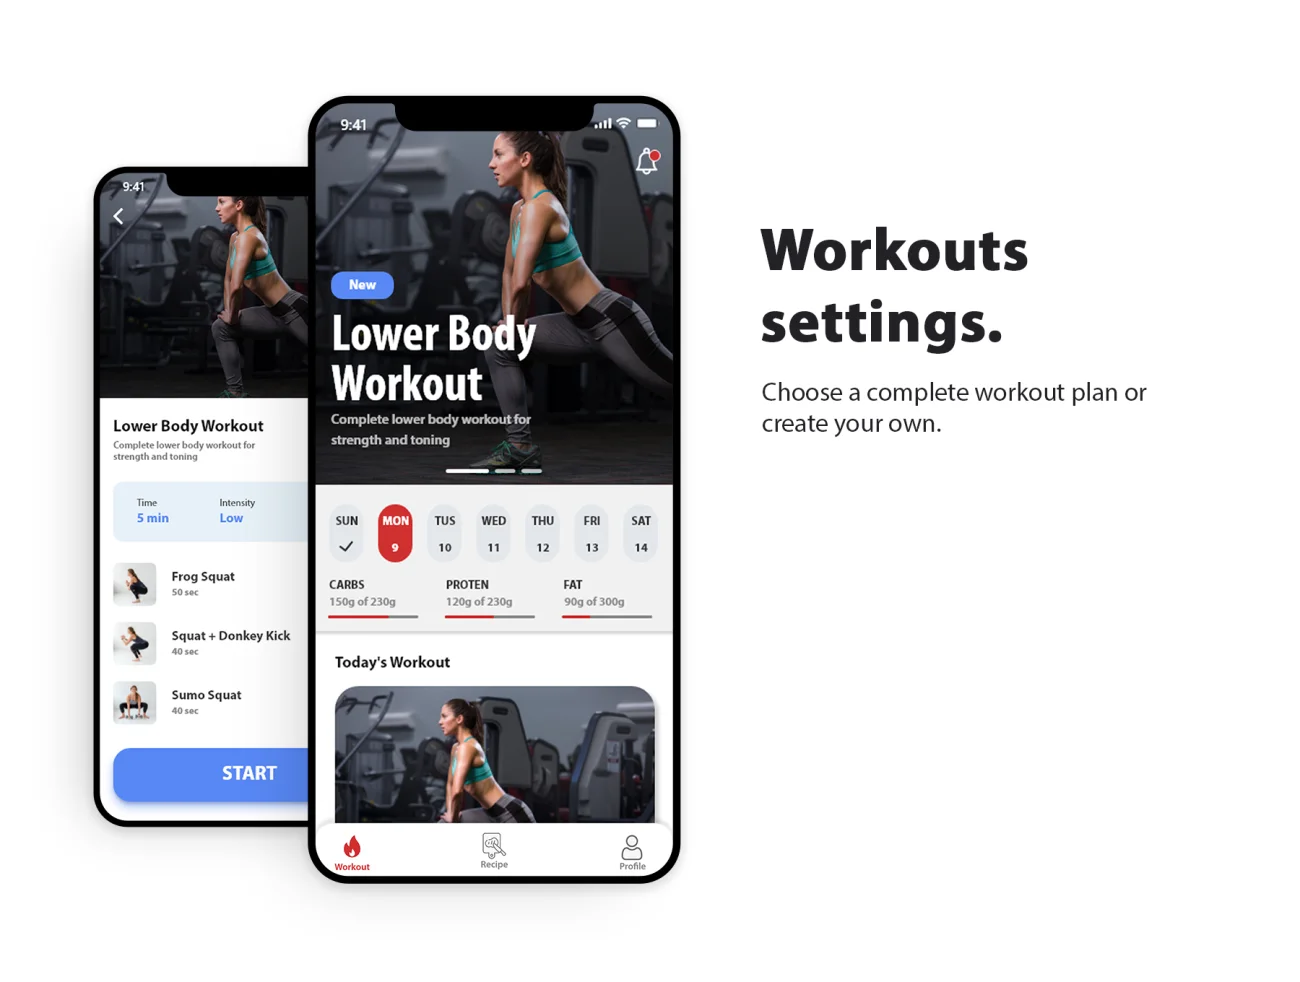 Ardent UI Kit 锻炼健身饮食用户界面套件-UI/UX-到位啦UI